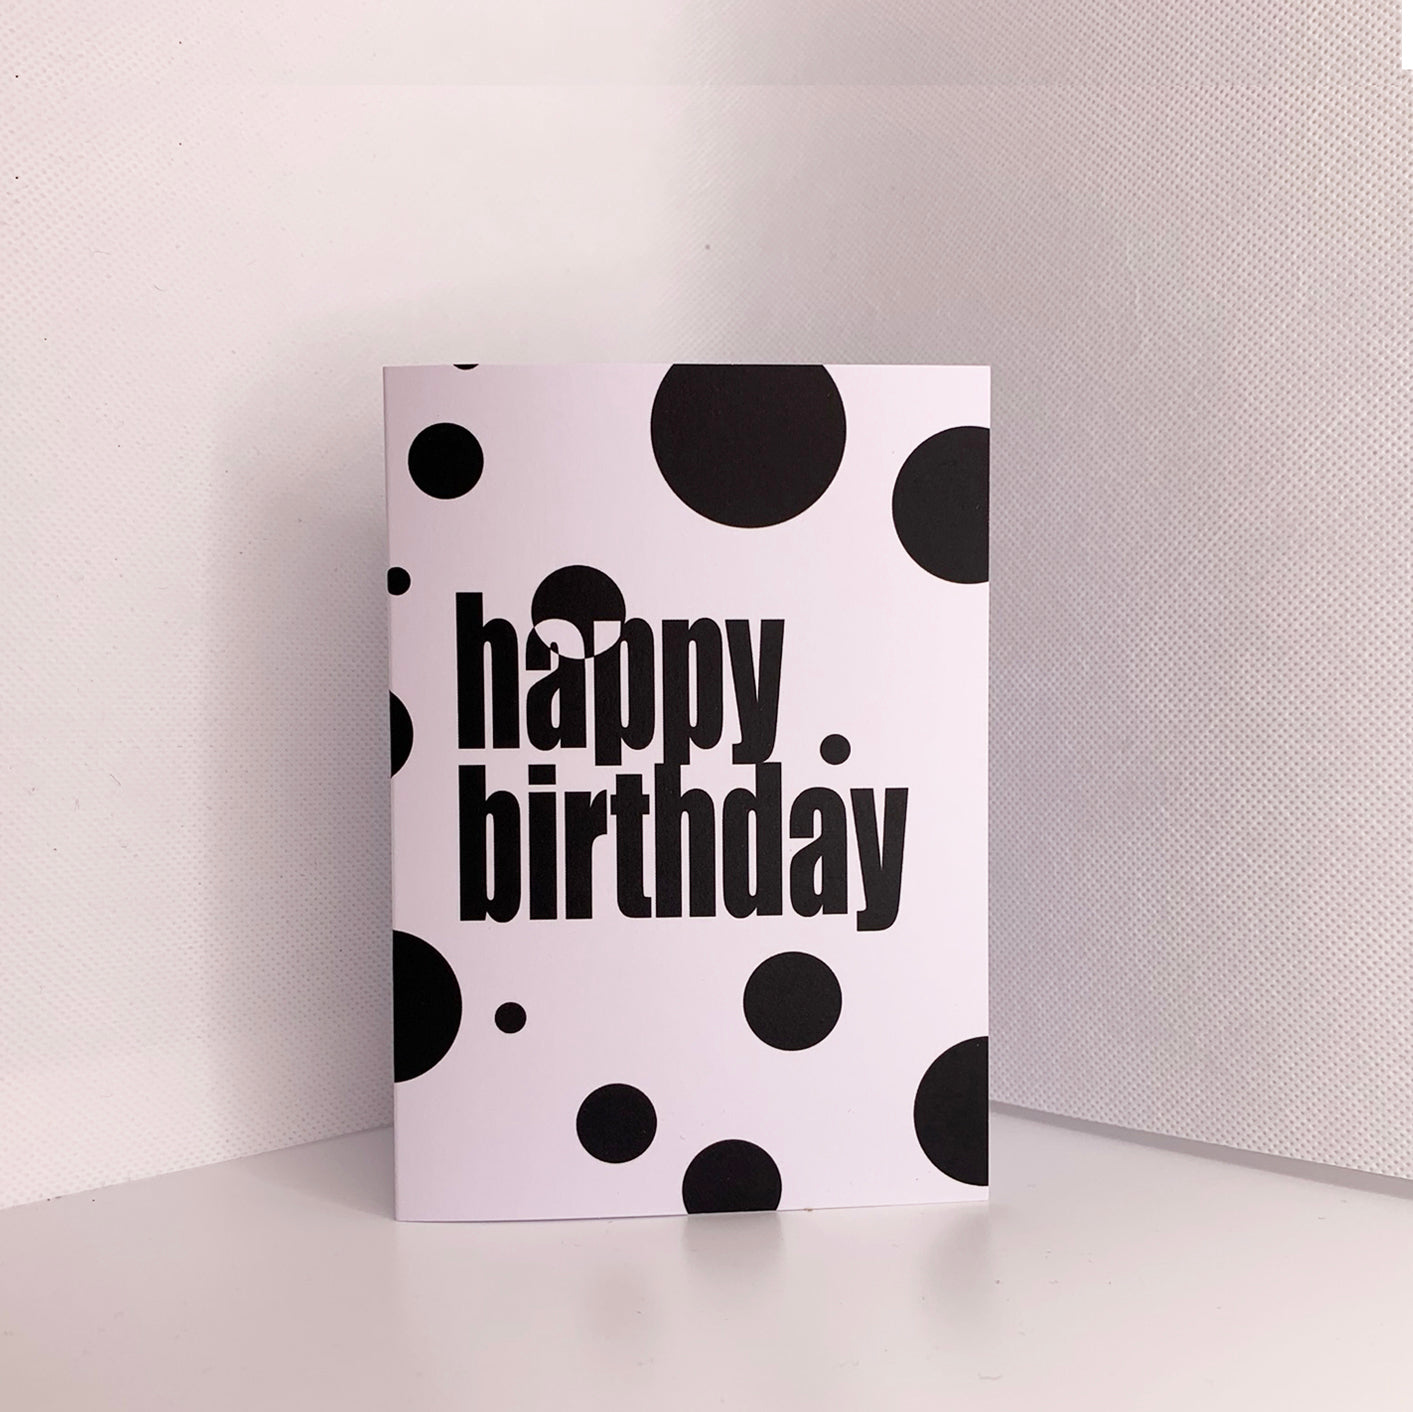 Happy Birthday - Greetings Card - black on white